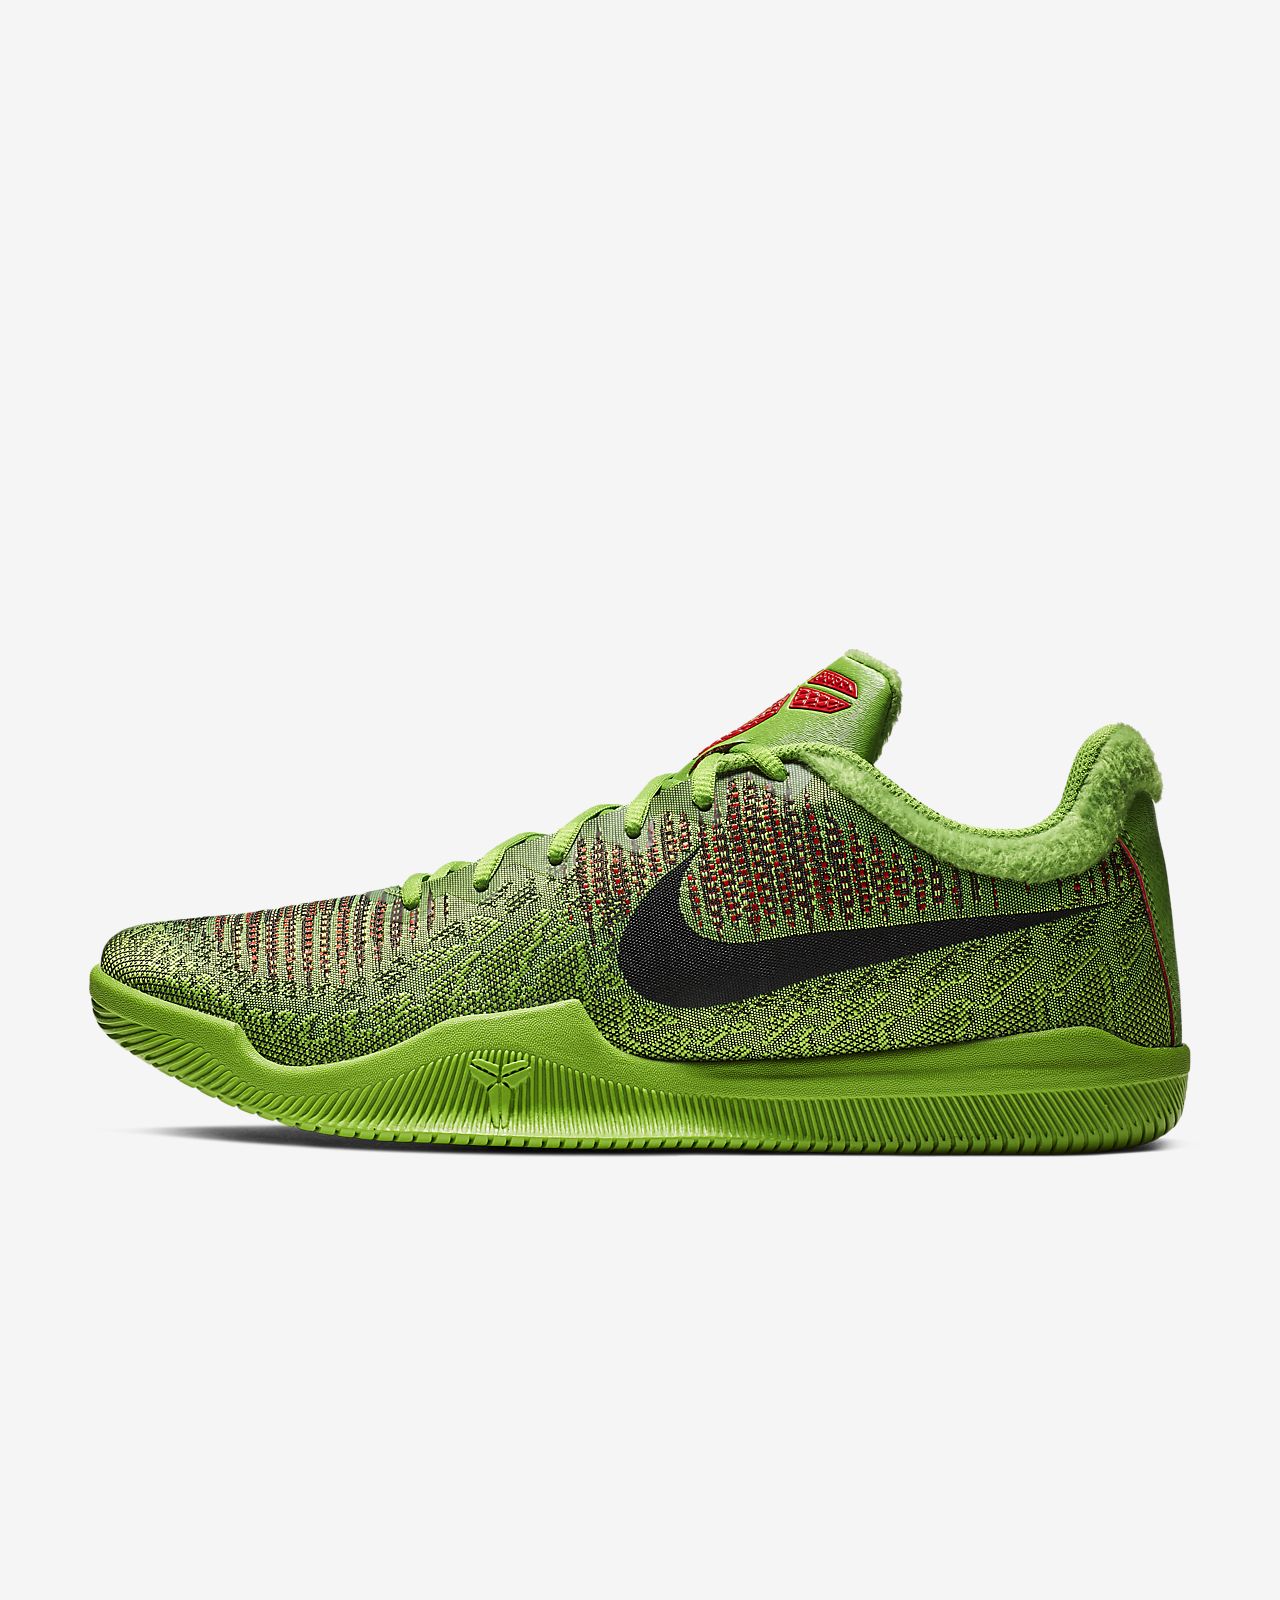 nike green basketball shoes